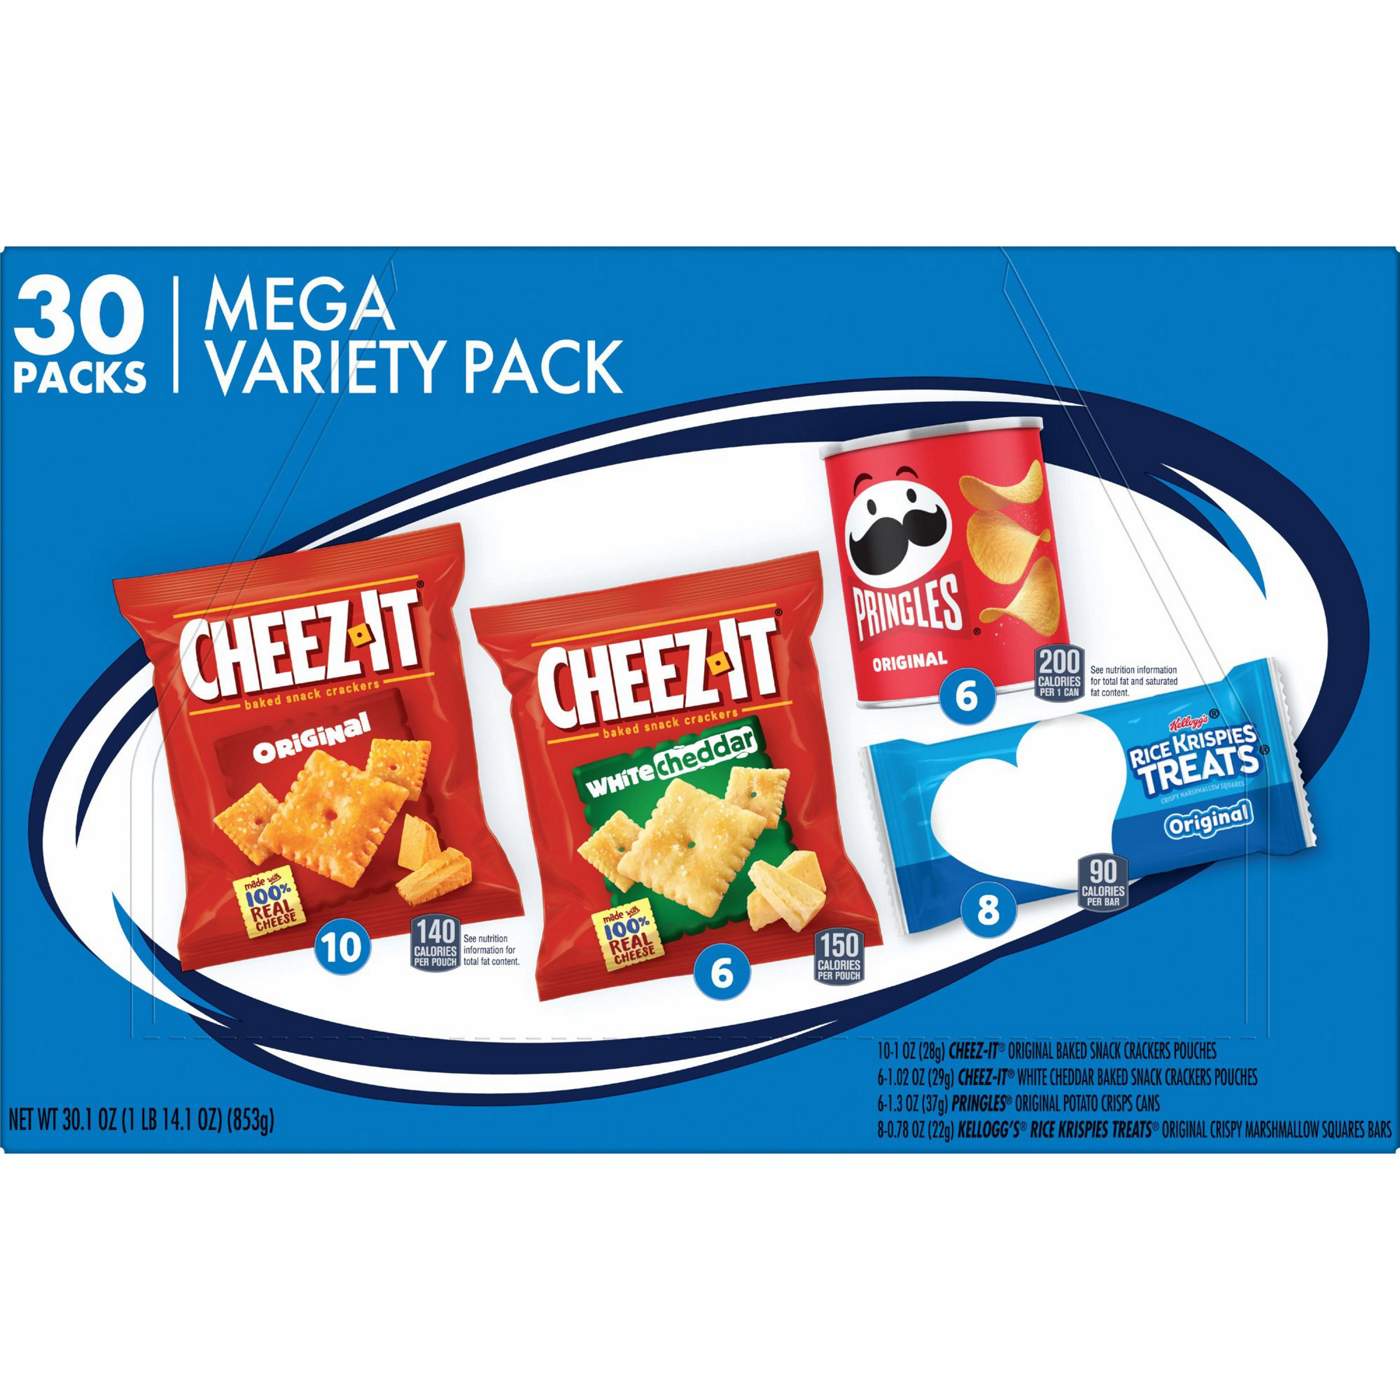 Kellogg's Variety Pack Snacks; image 1 of 3